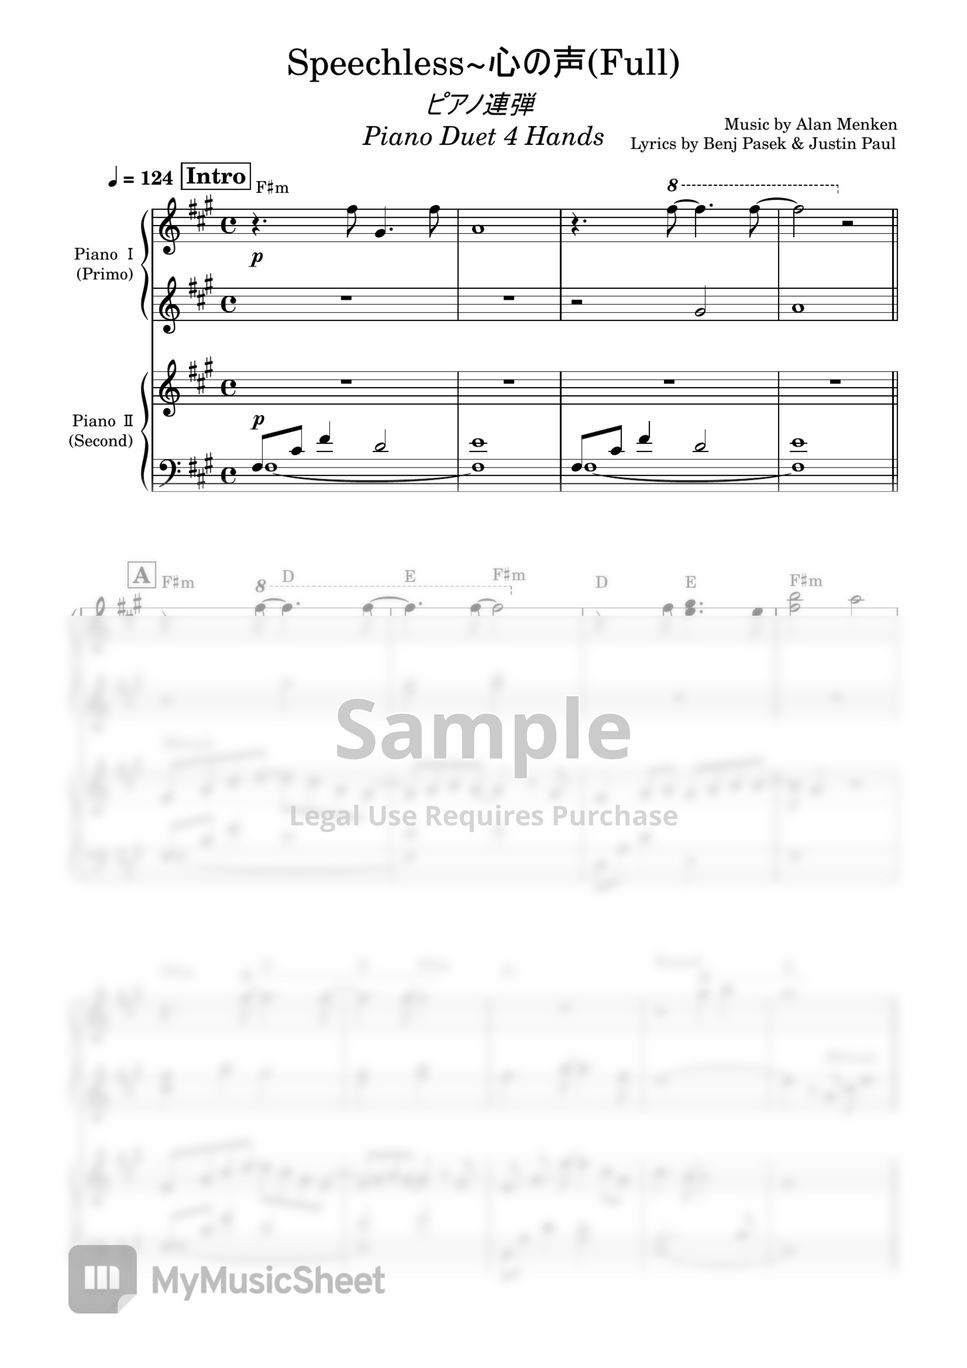 Naomi Scott - Speechless (Piano Duet 4 Hands) by Kensaku Suzuki